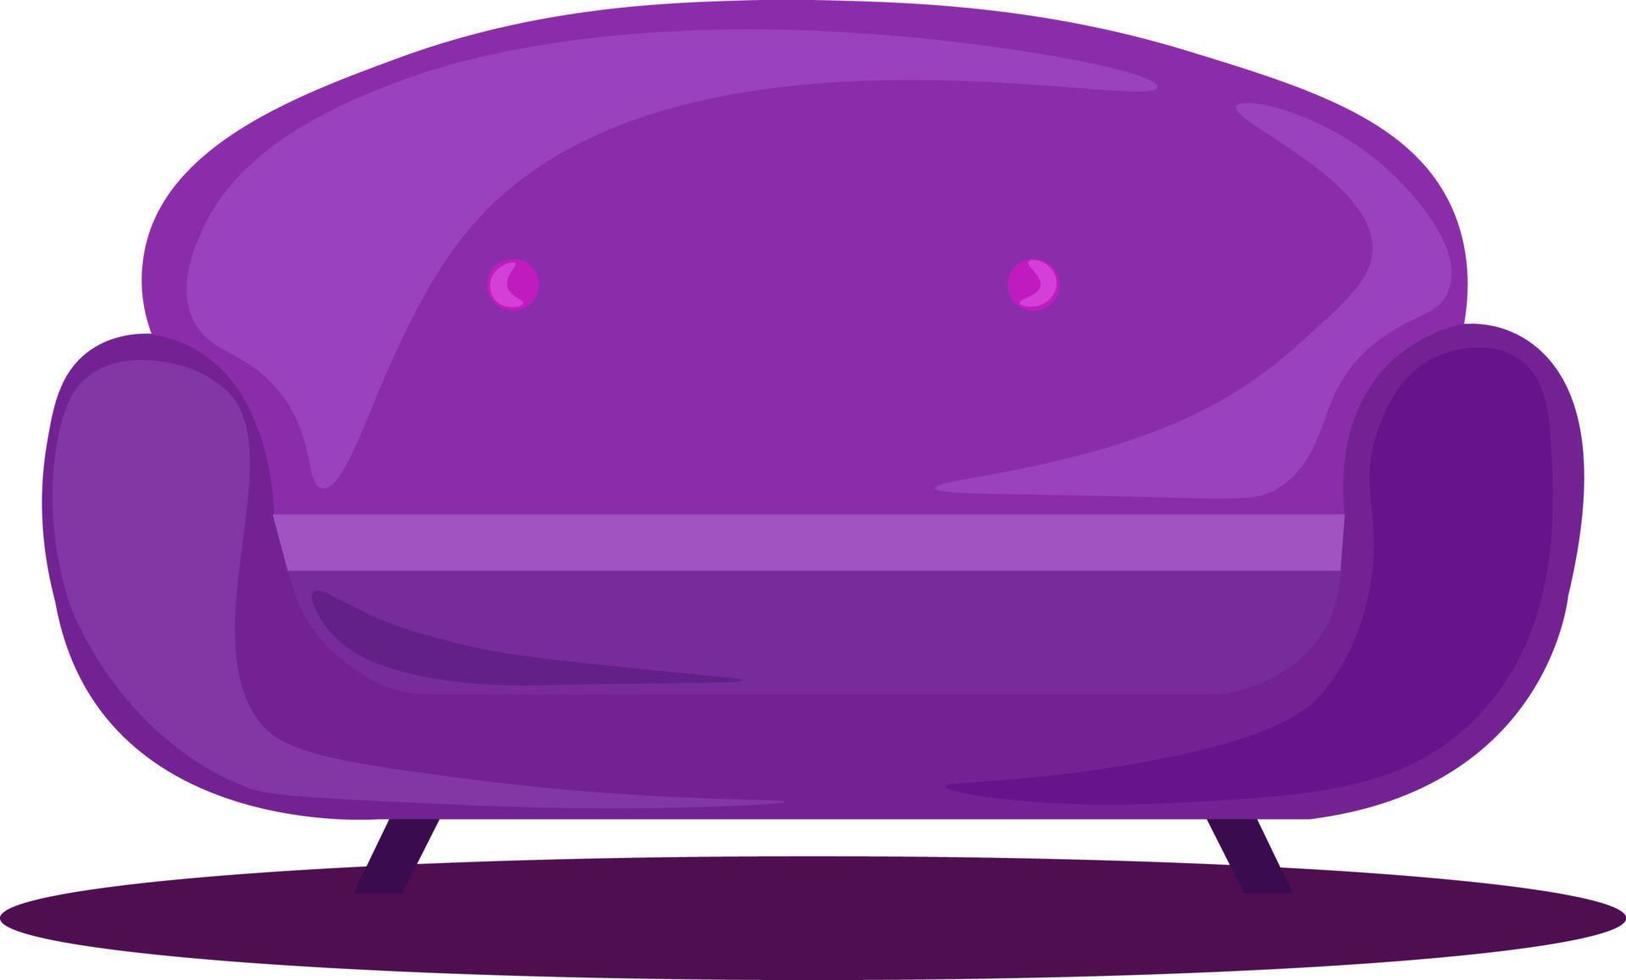 Purple sofa, illustration, vector on white background.